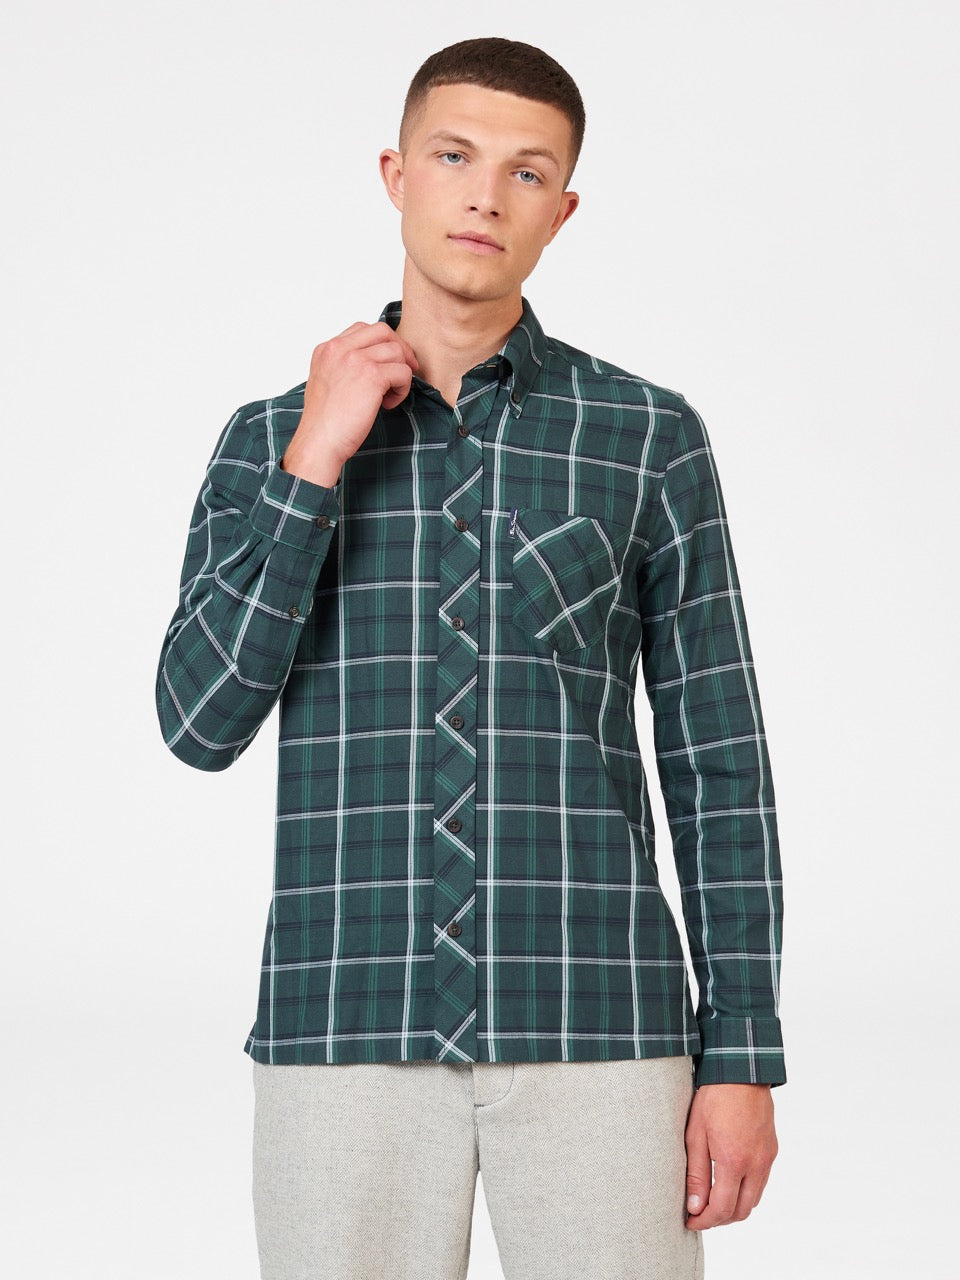 Grid Check Shirt - Fraser Green